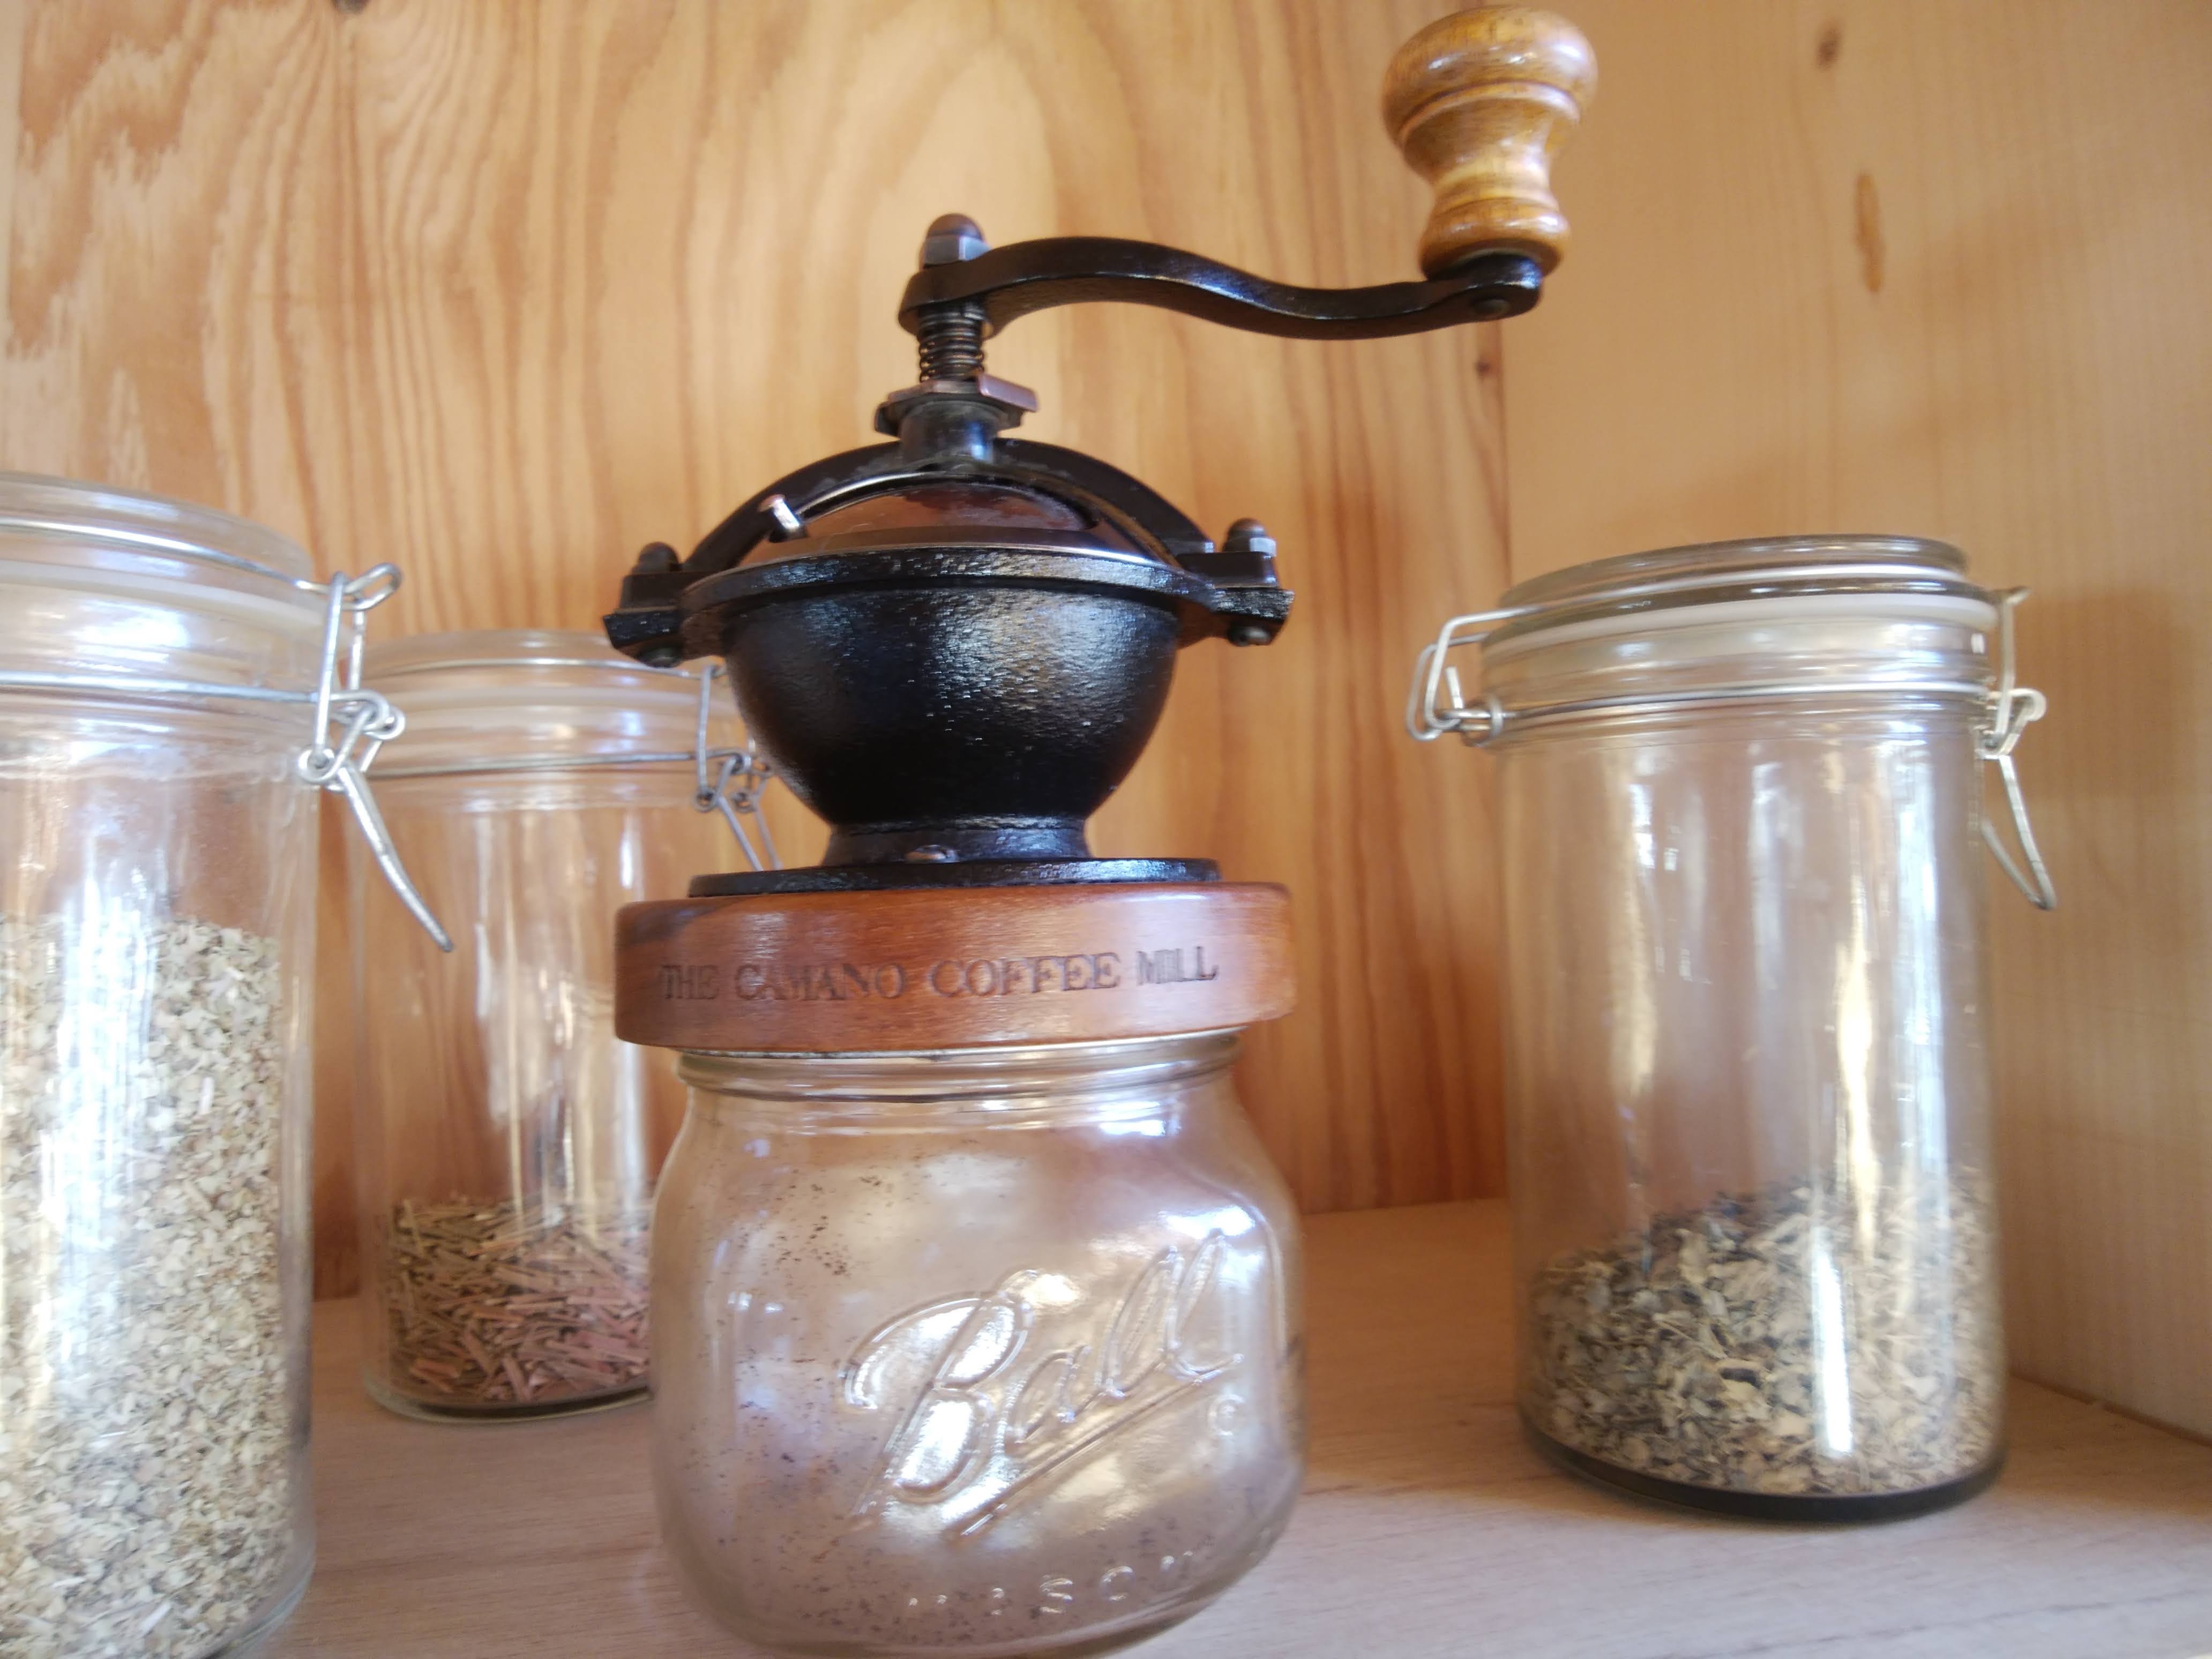 Camano Coffee Mill カマノコーヒーミル - 調理器具